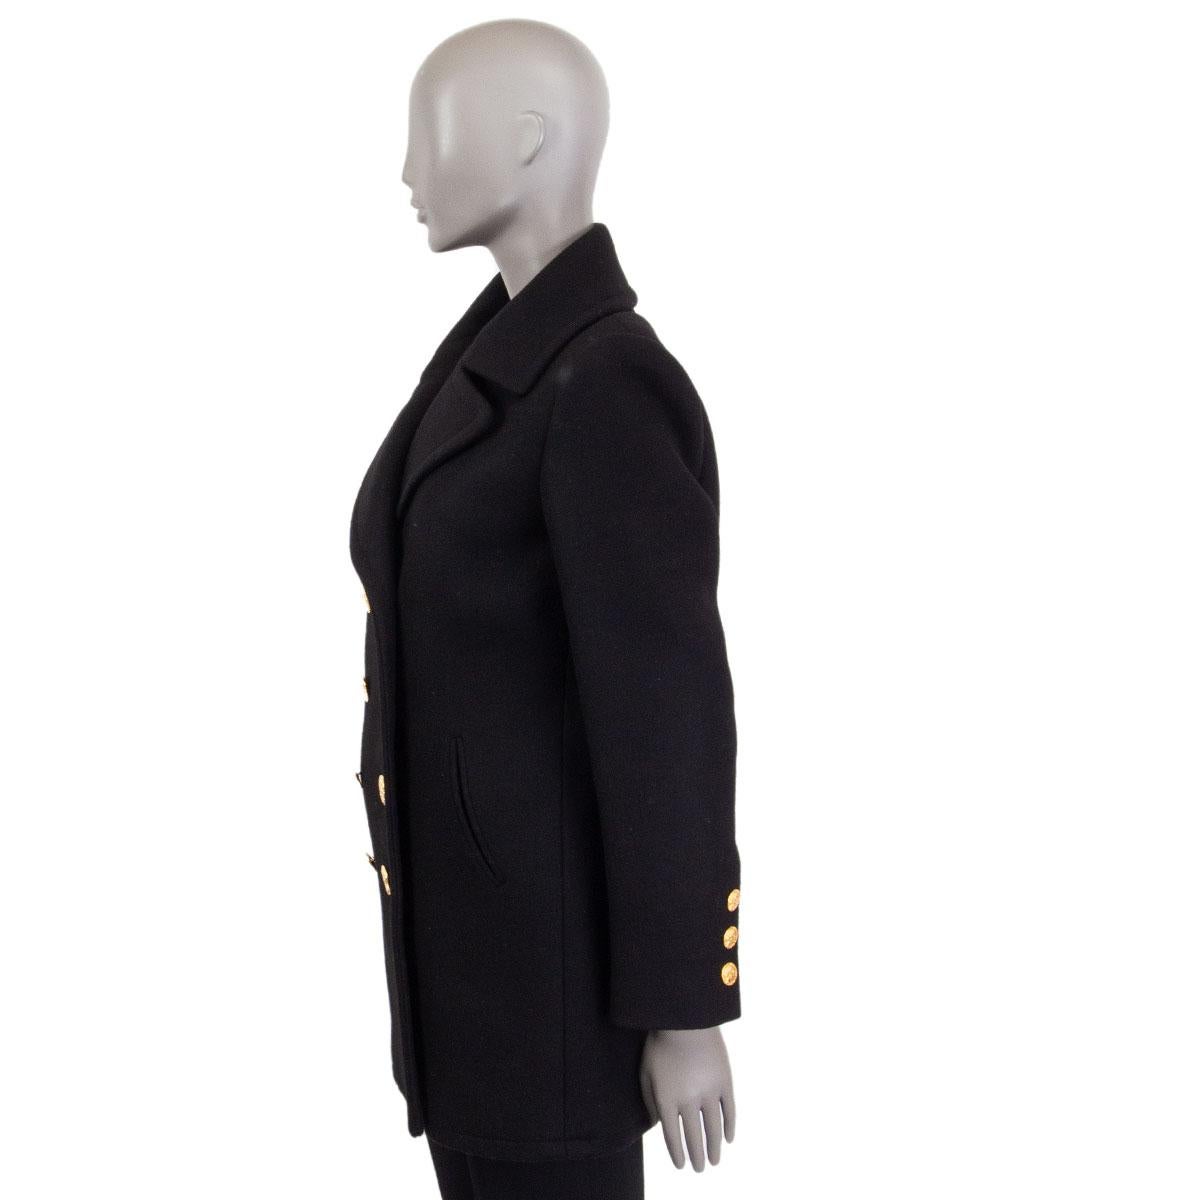 Black CHANEL black cashmere ROME Double Breasted Peacoat Coat Jacket 36 XS